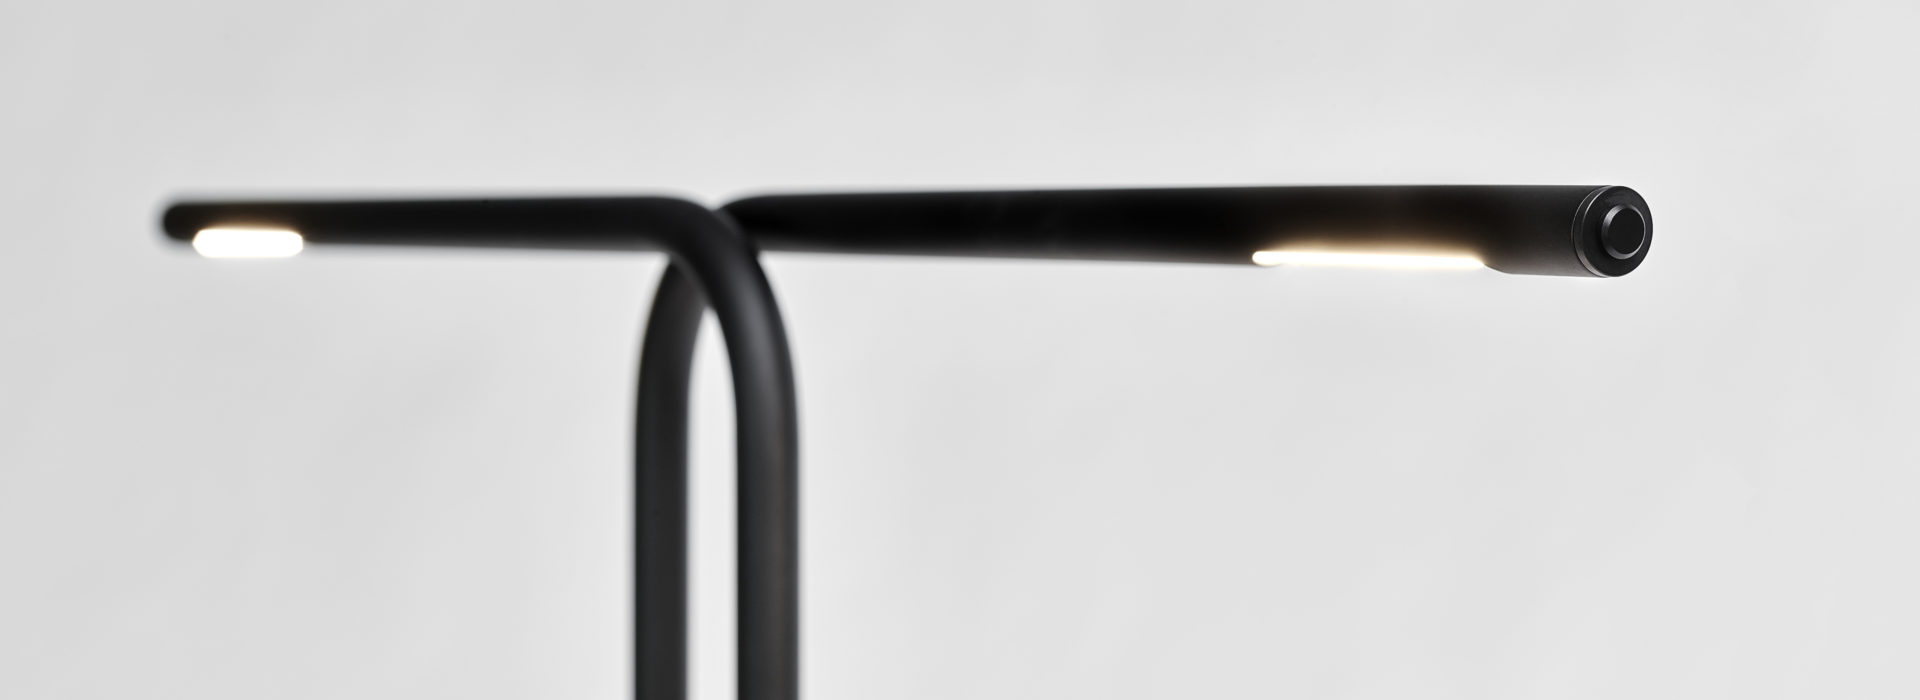 Clip Desk Light Top Detail Faulknerbrowns Architects Atelje Lyktan Csh